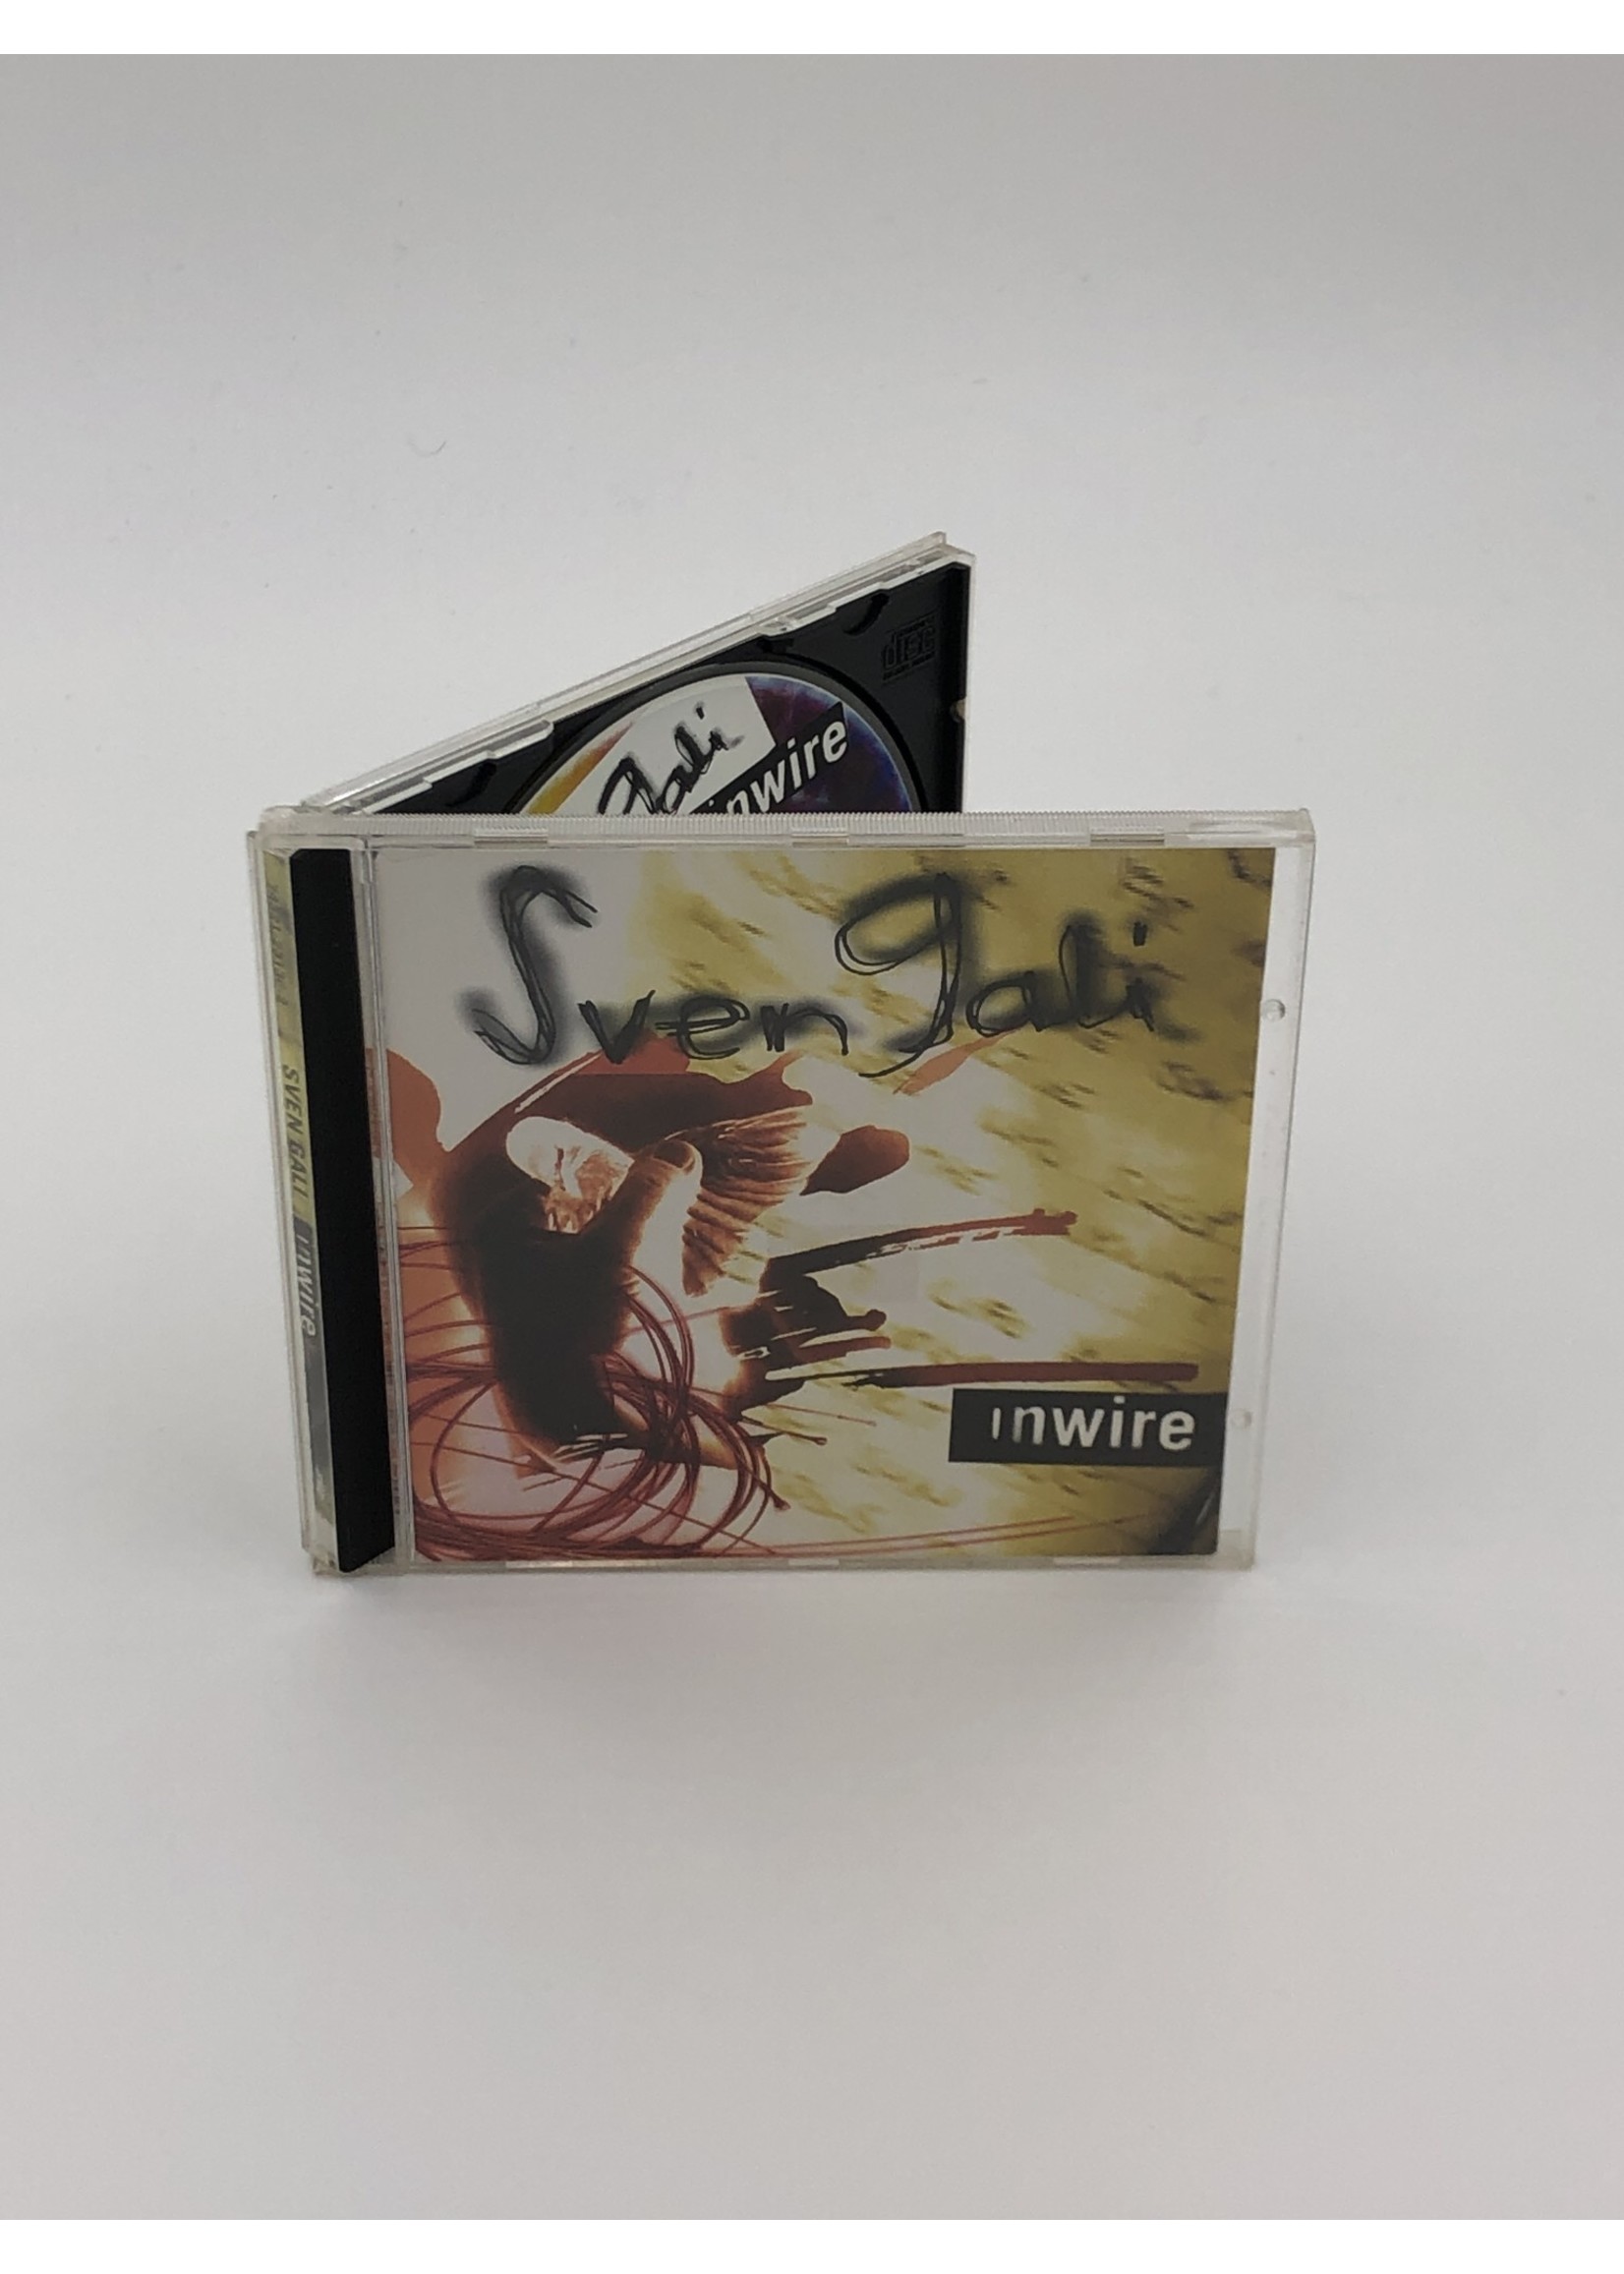 CD Sven Gali: Inwire CD